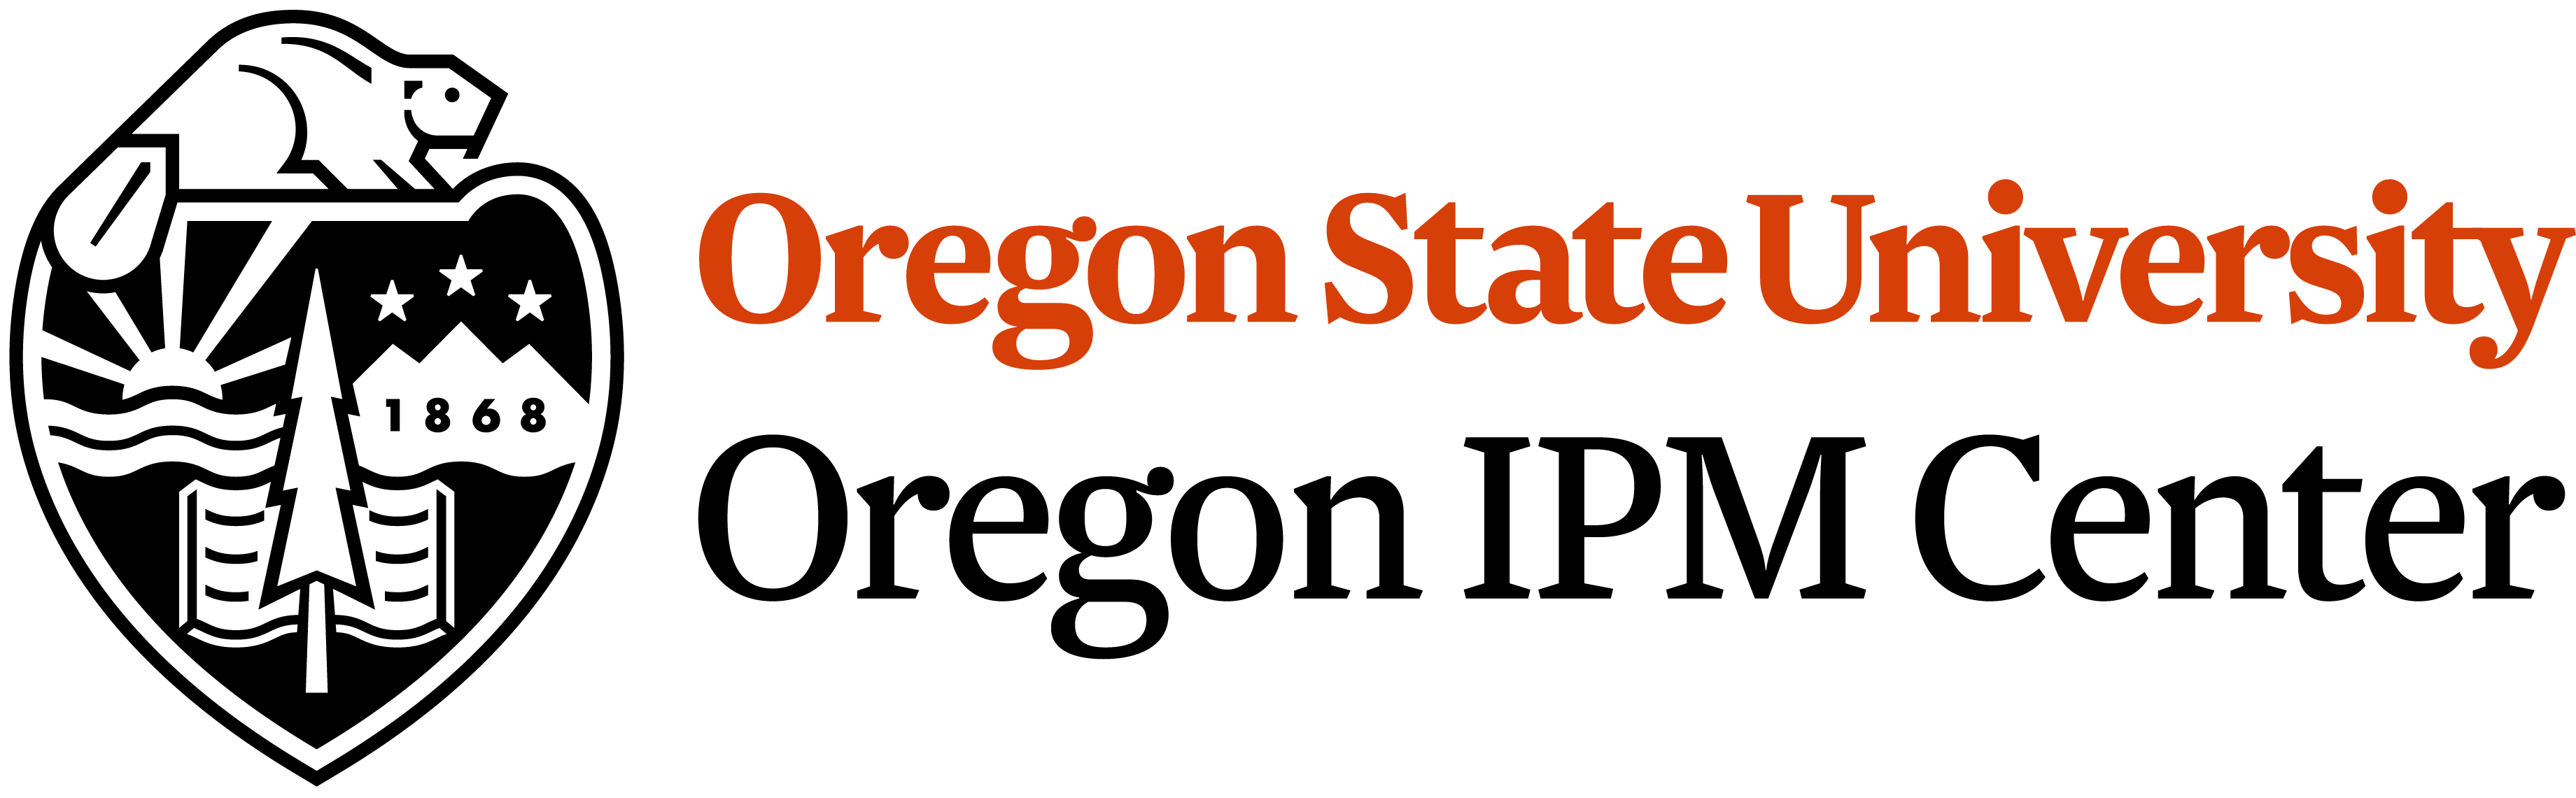 Oregon IPM Center at State University